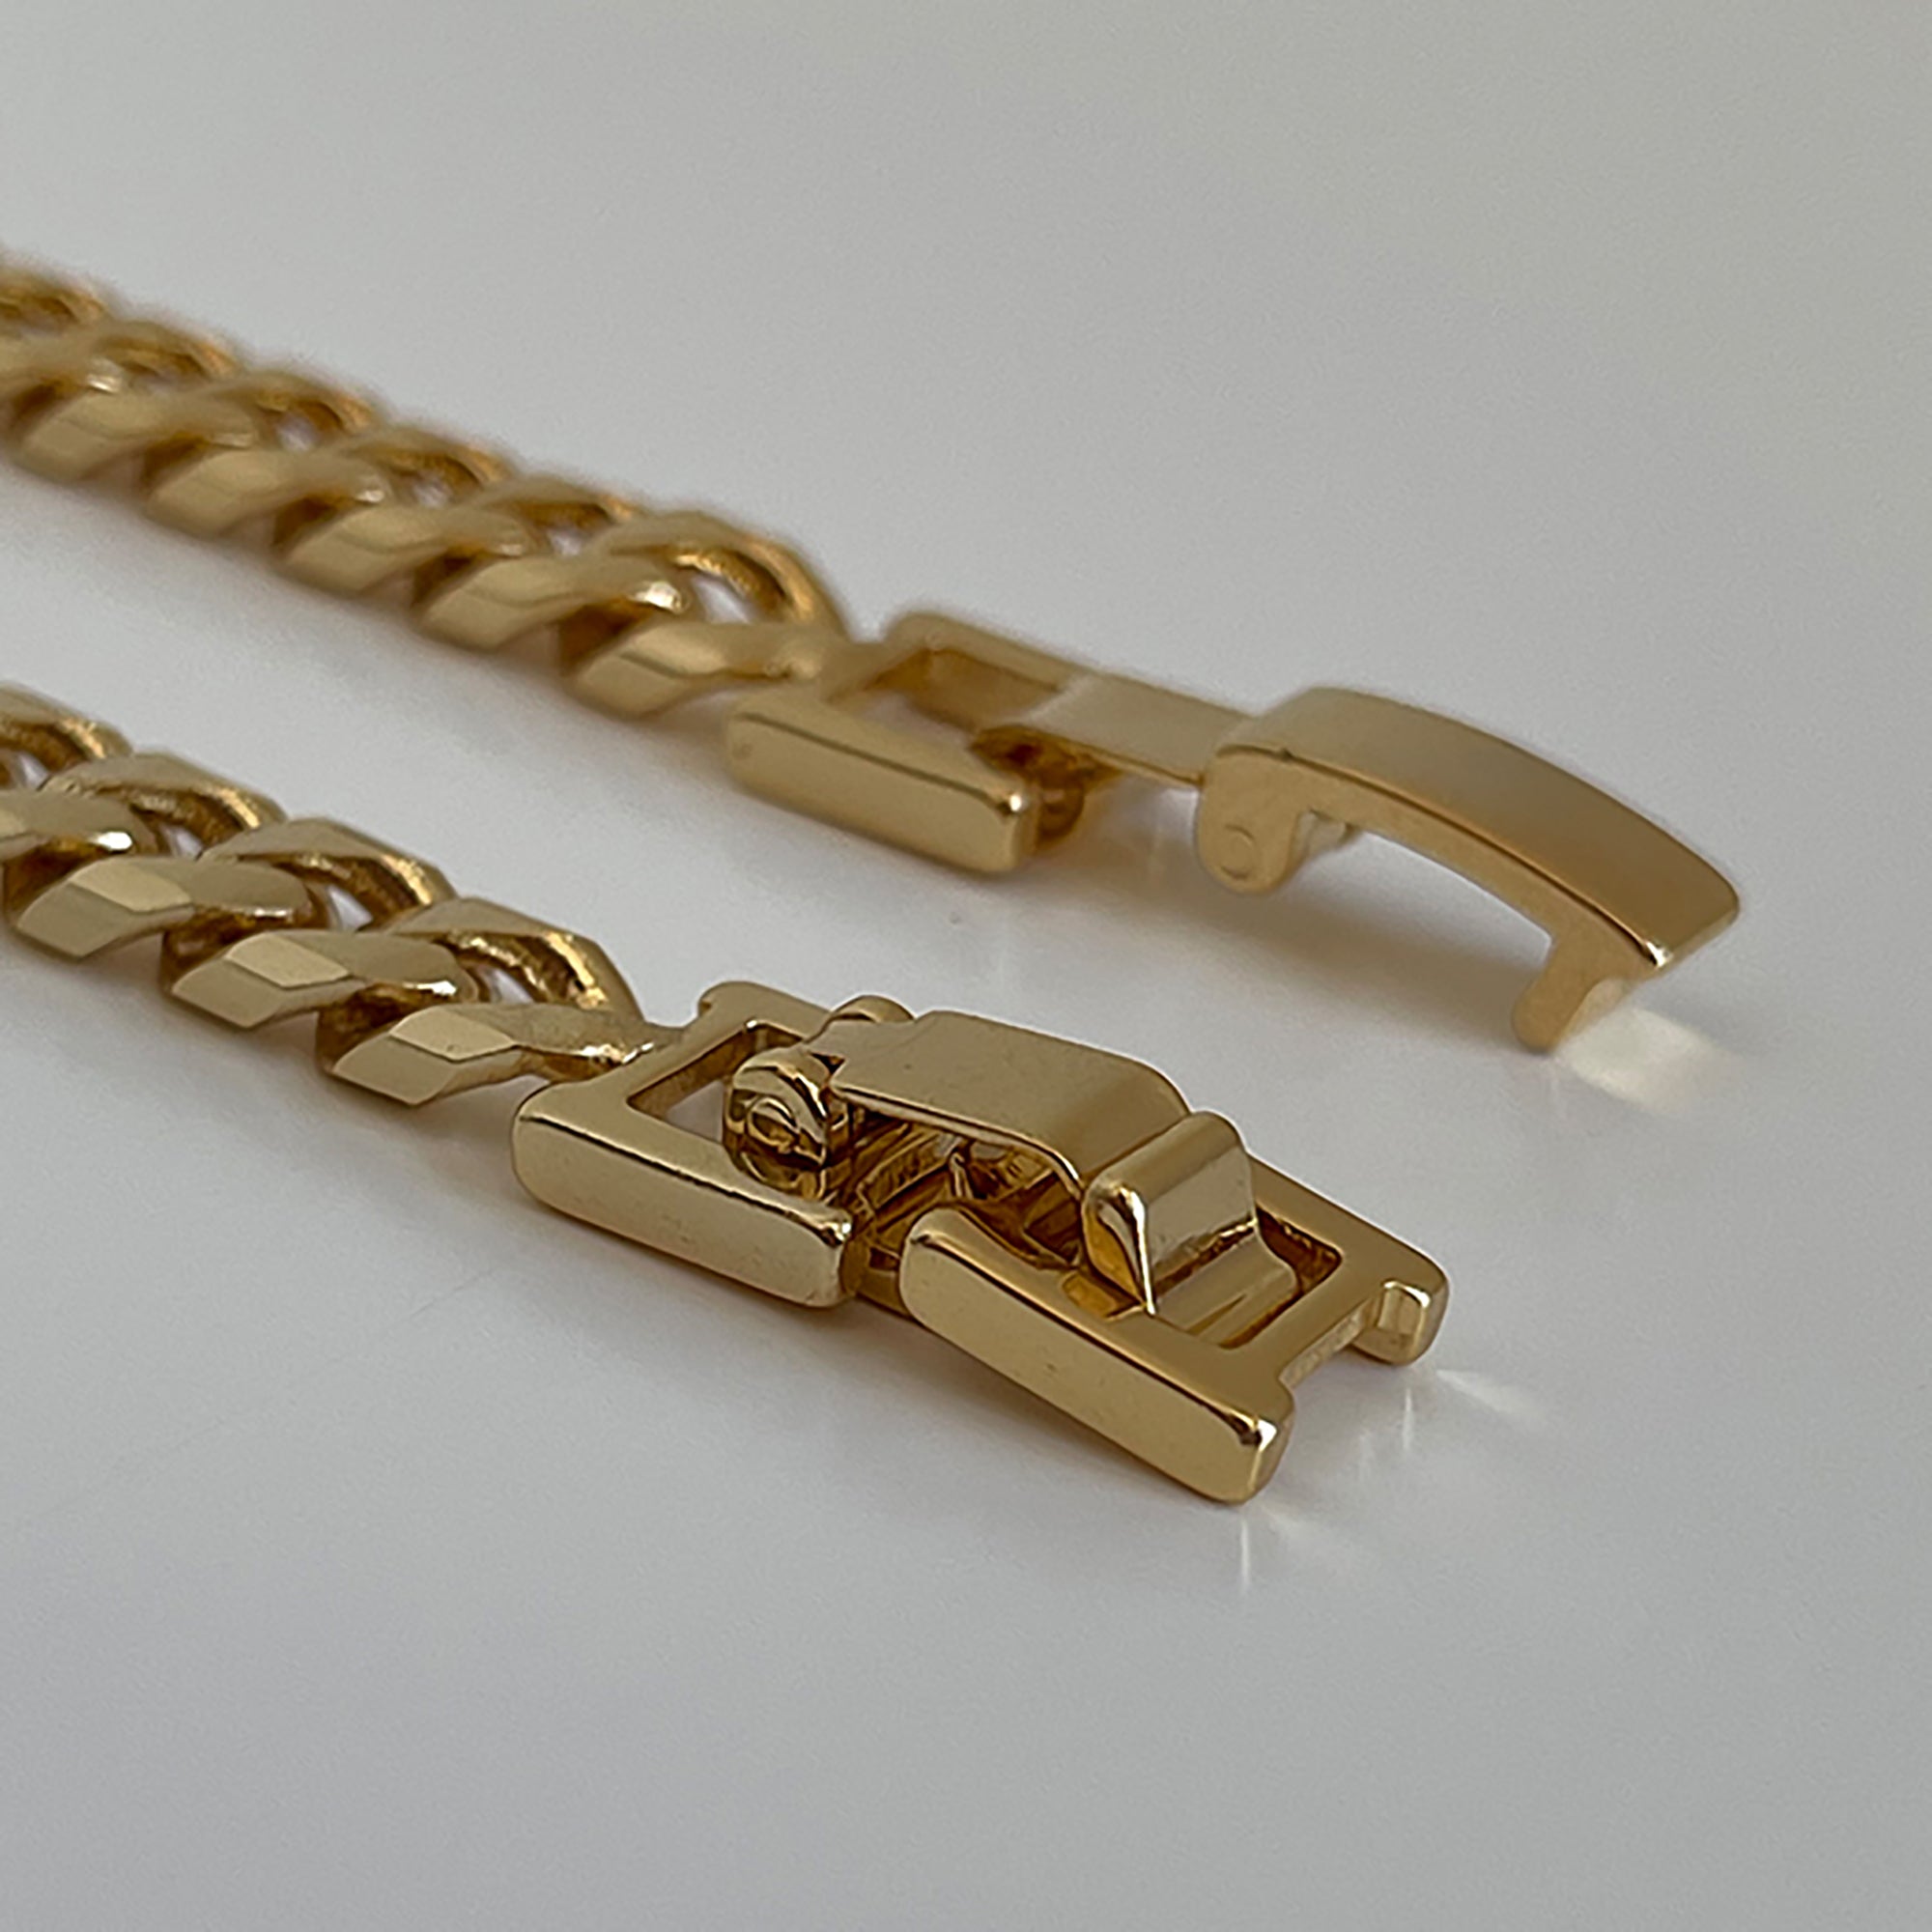 Gold Plated Jeweled Necklace / Bracelet Valentine Day Gift